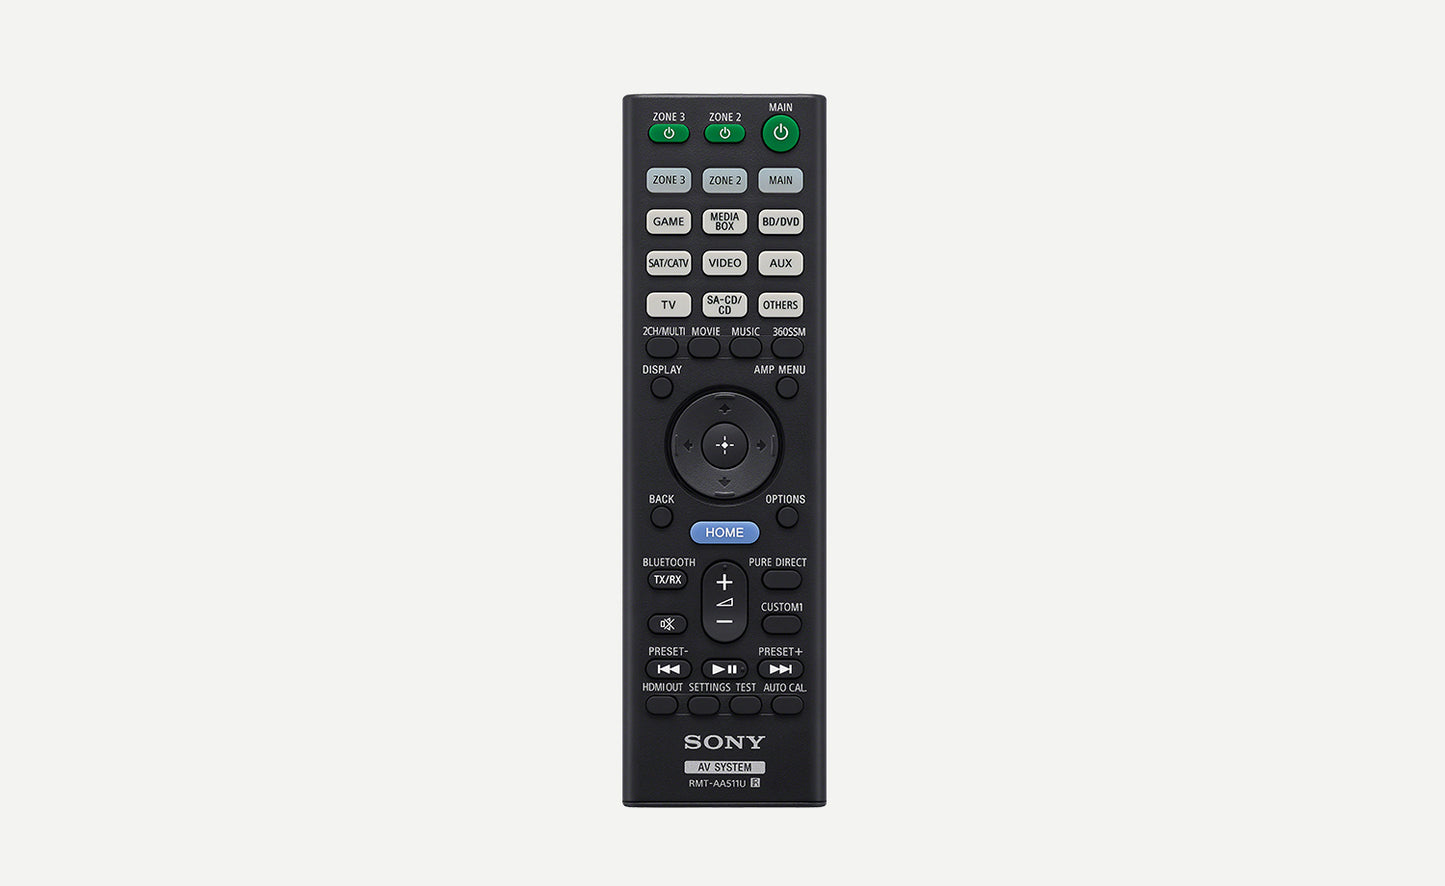 Sony STRAZ5000ES 11.2 Channel Home Theater ES Receiver 130W